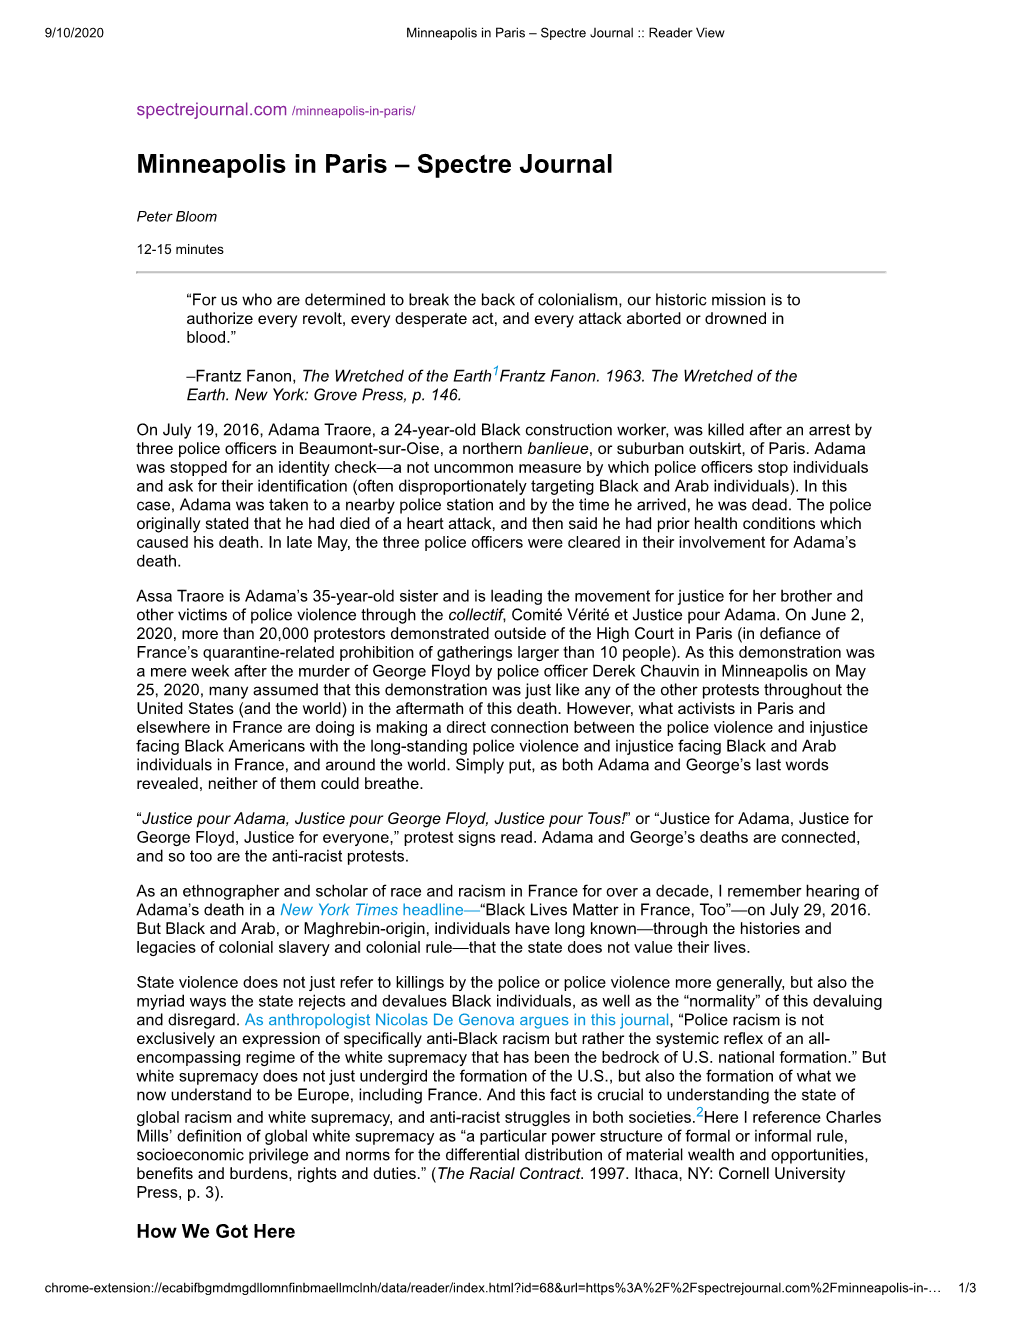 Minneapolis in Paris – Spectre Journal :: Reader View